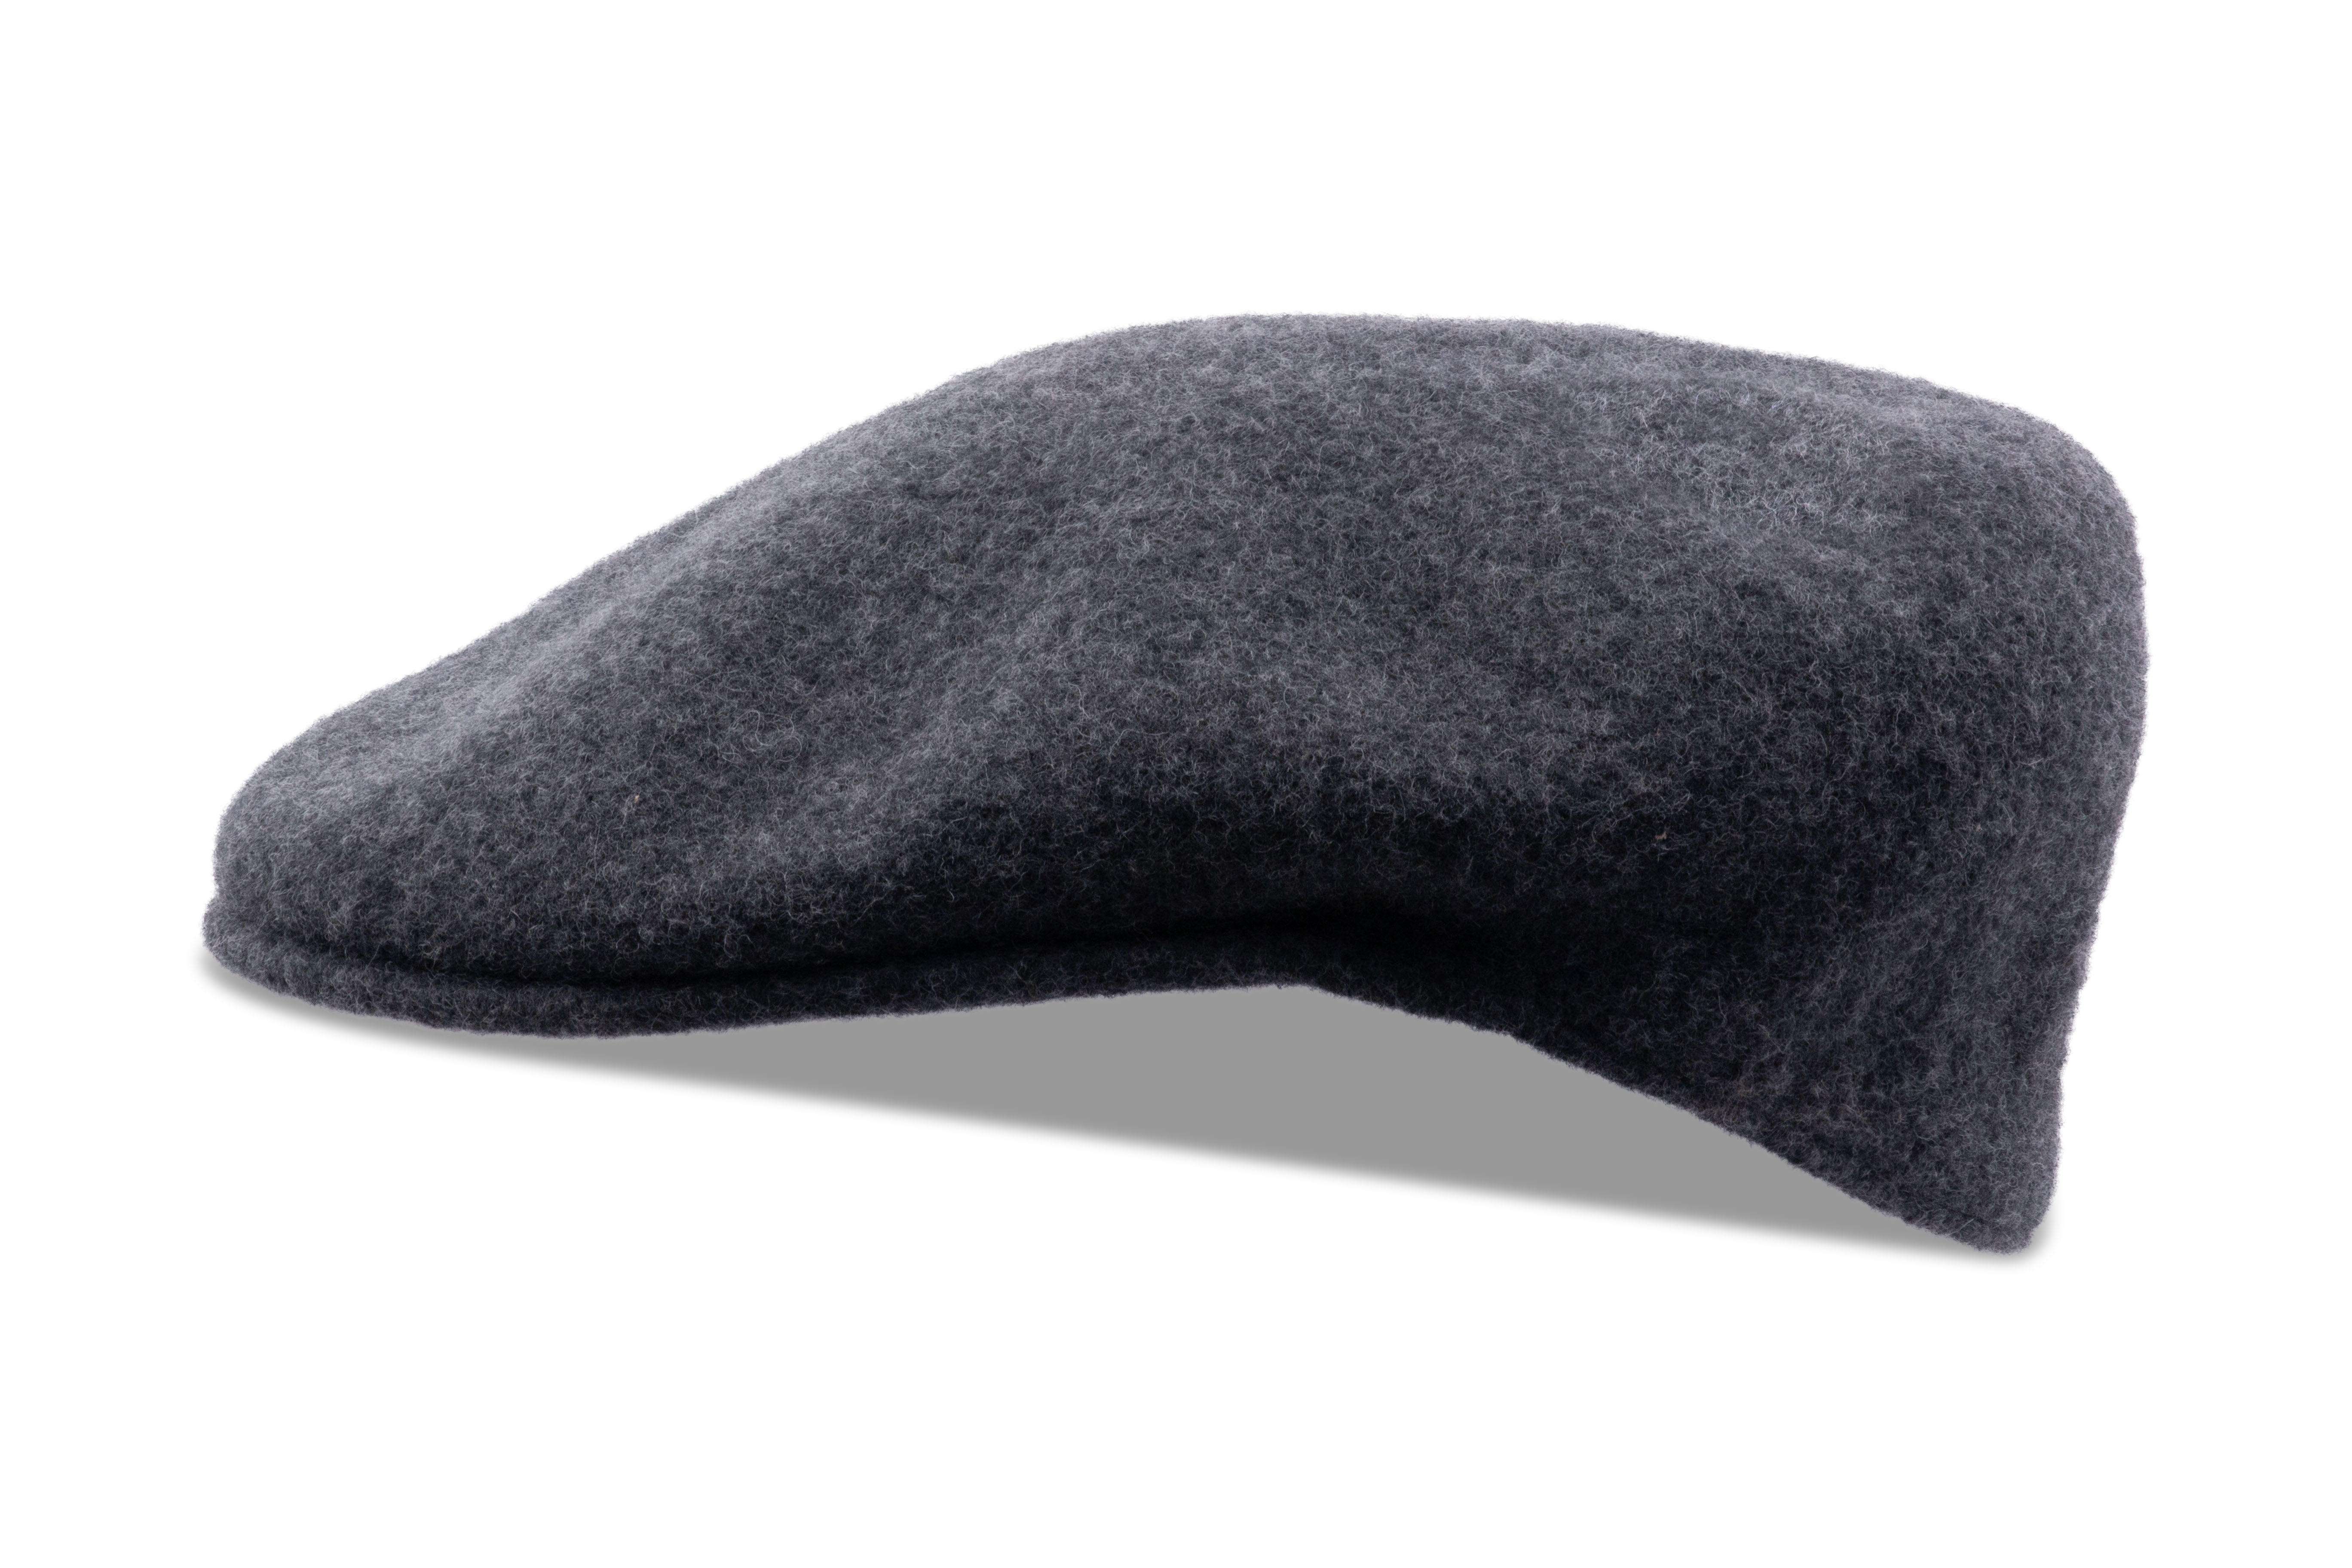 Kangol 504 Wool Felt Hat for Men and Women - Dark Flannel - M